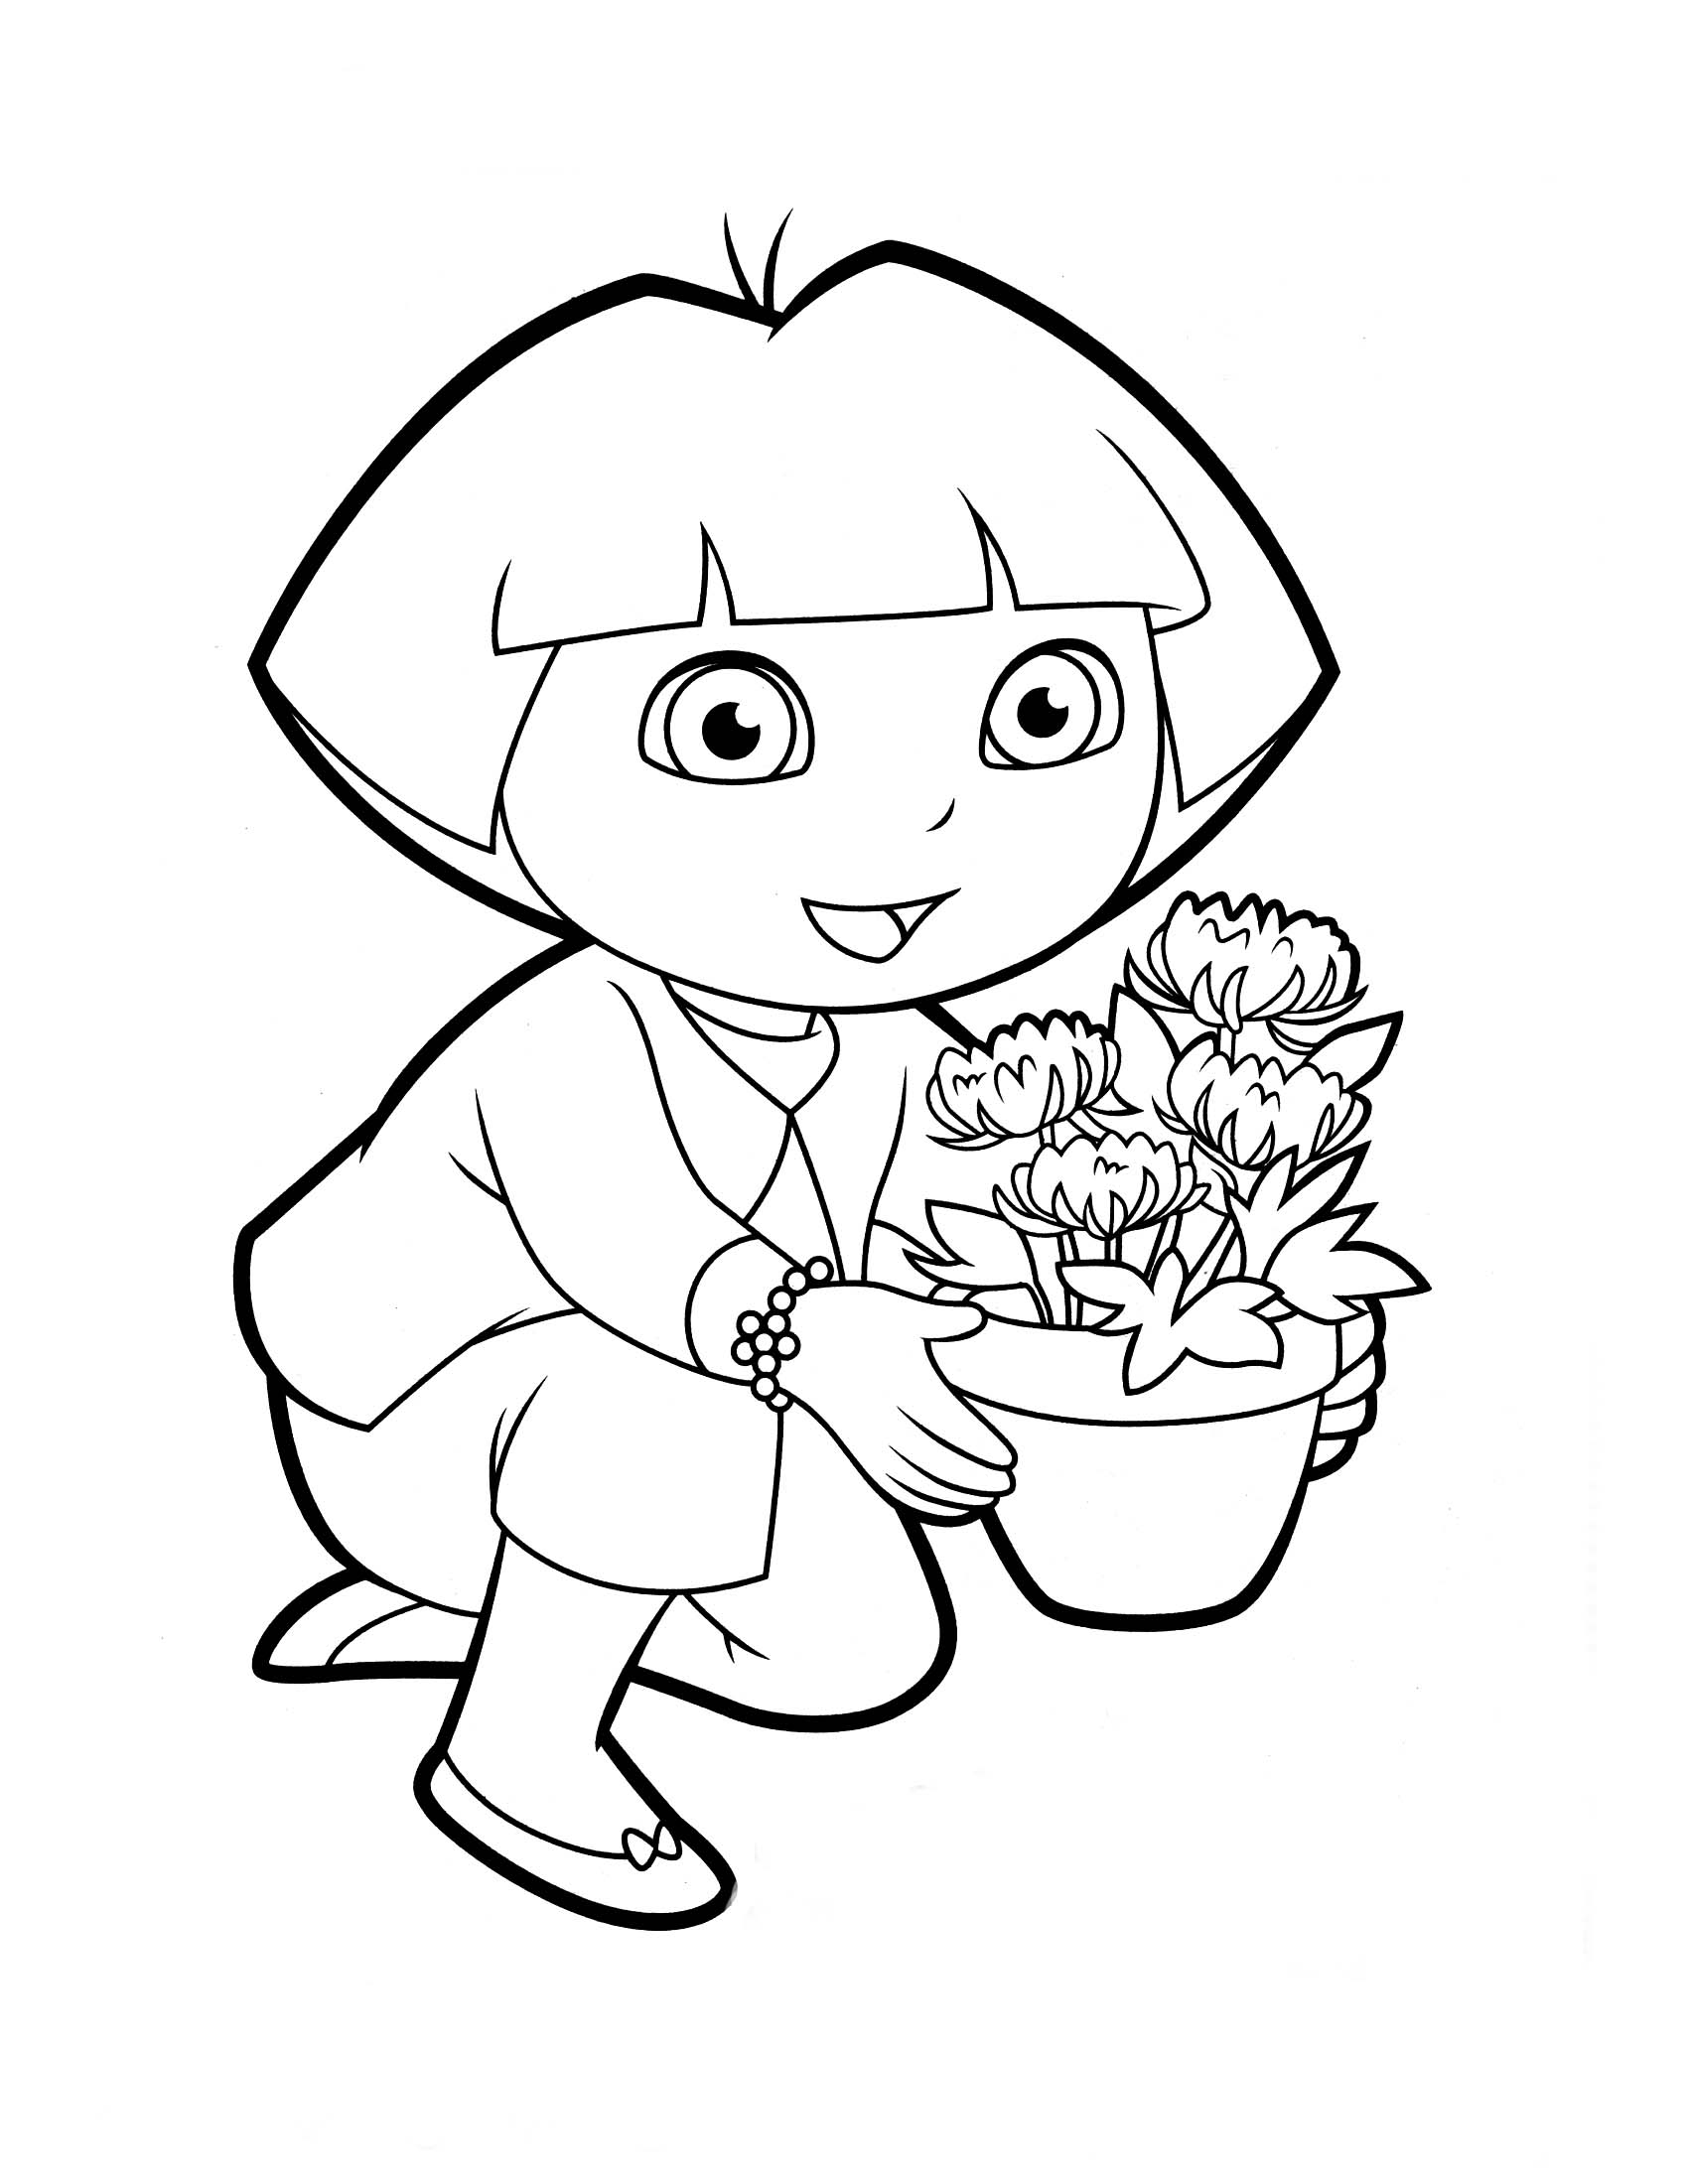 Dora cuidando das flores